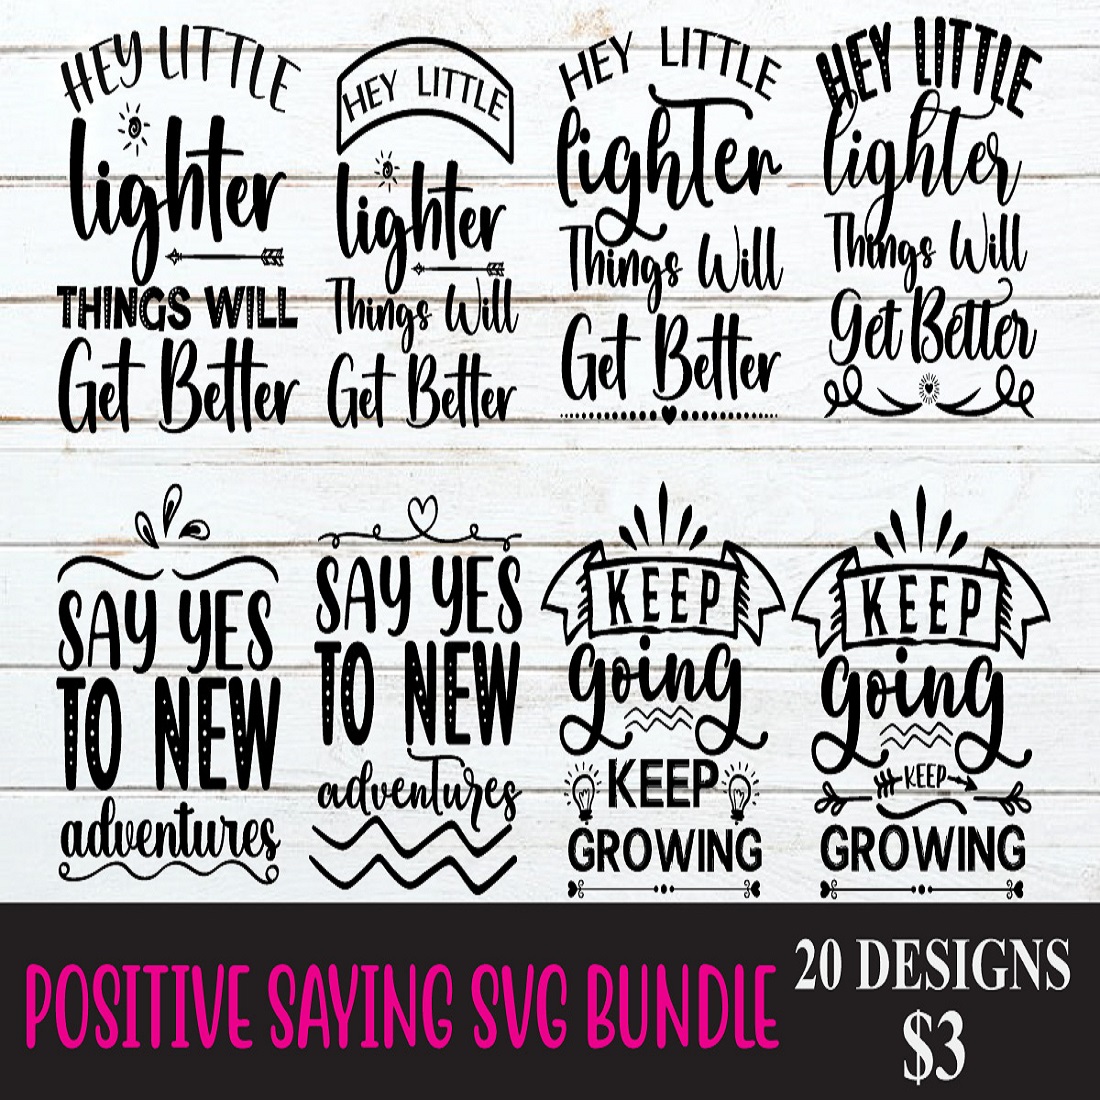 Positive Saying SVG Bundle cover image.